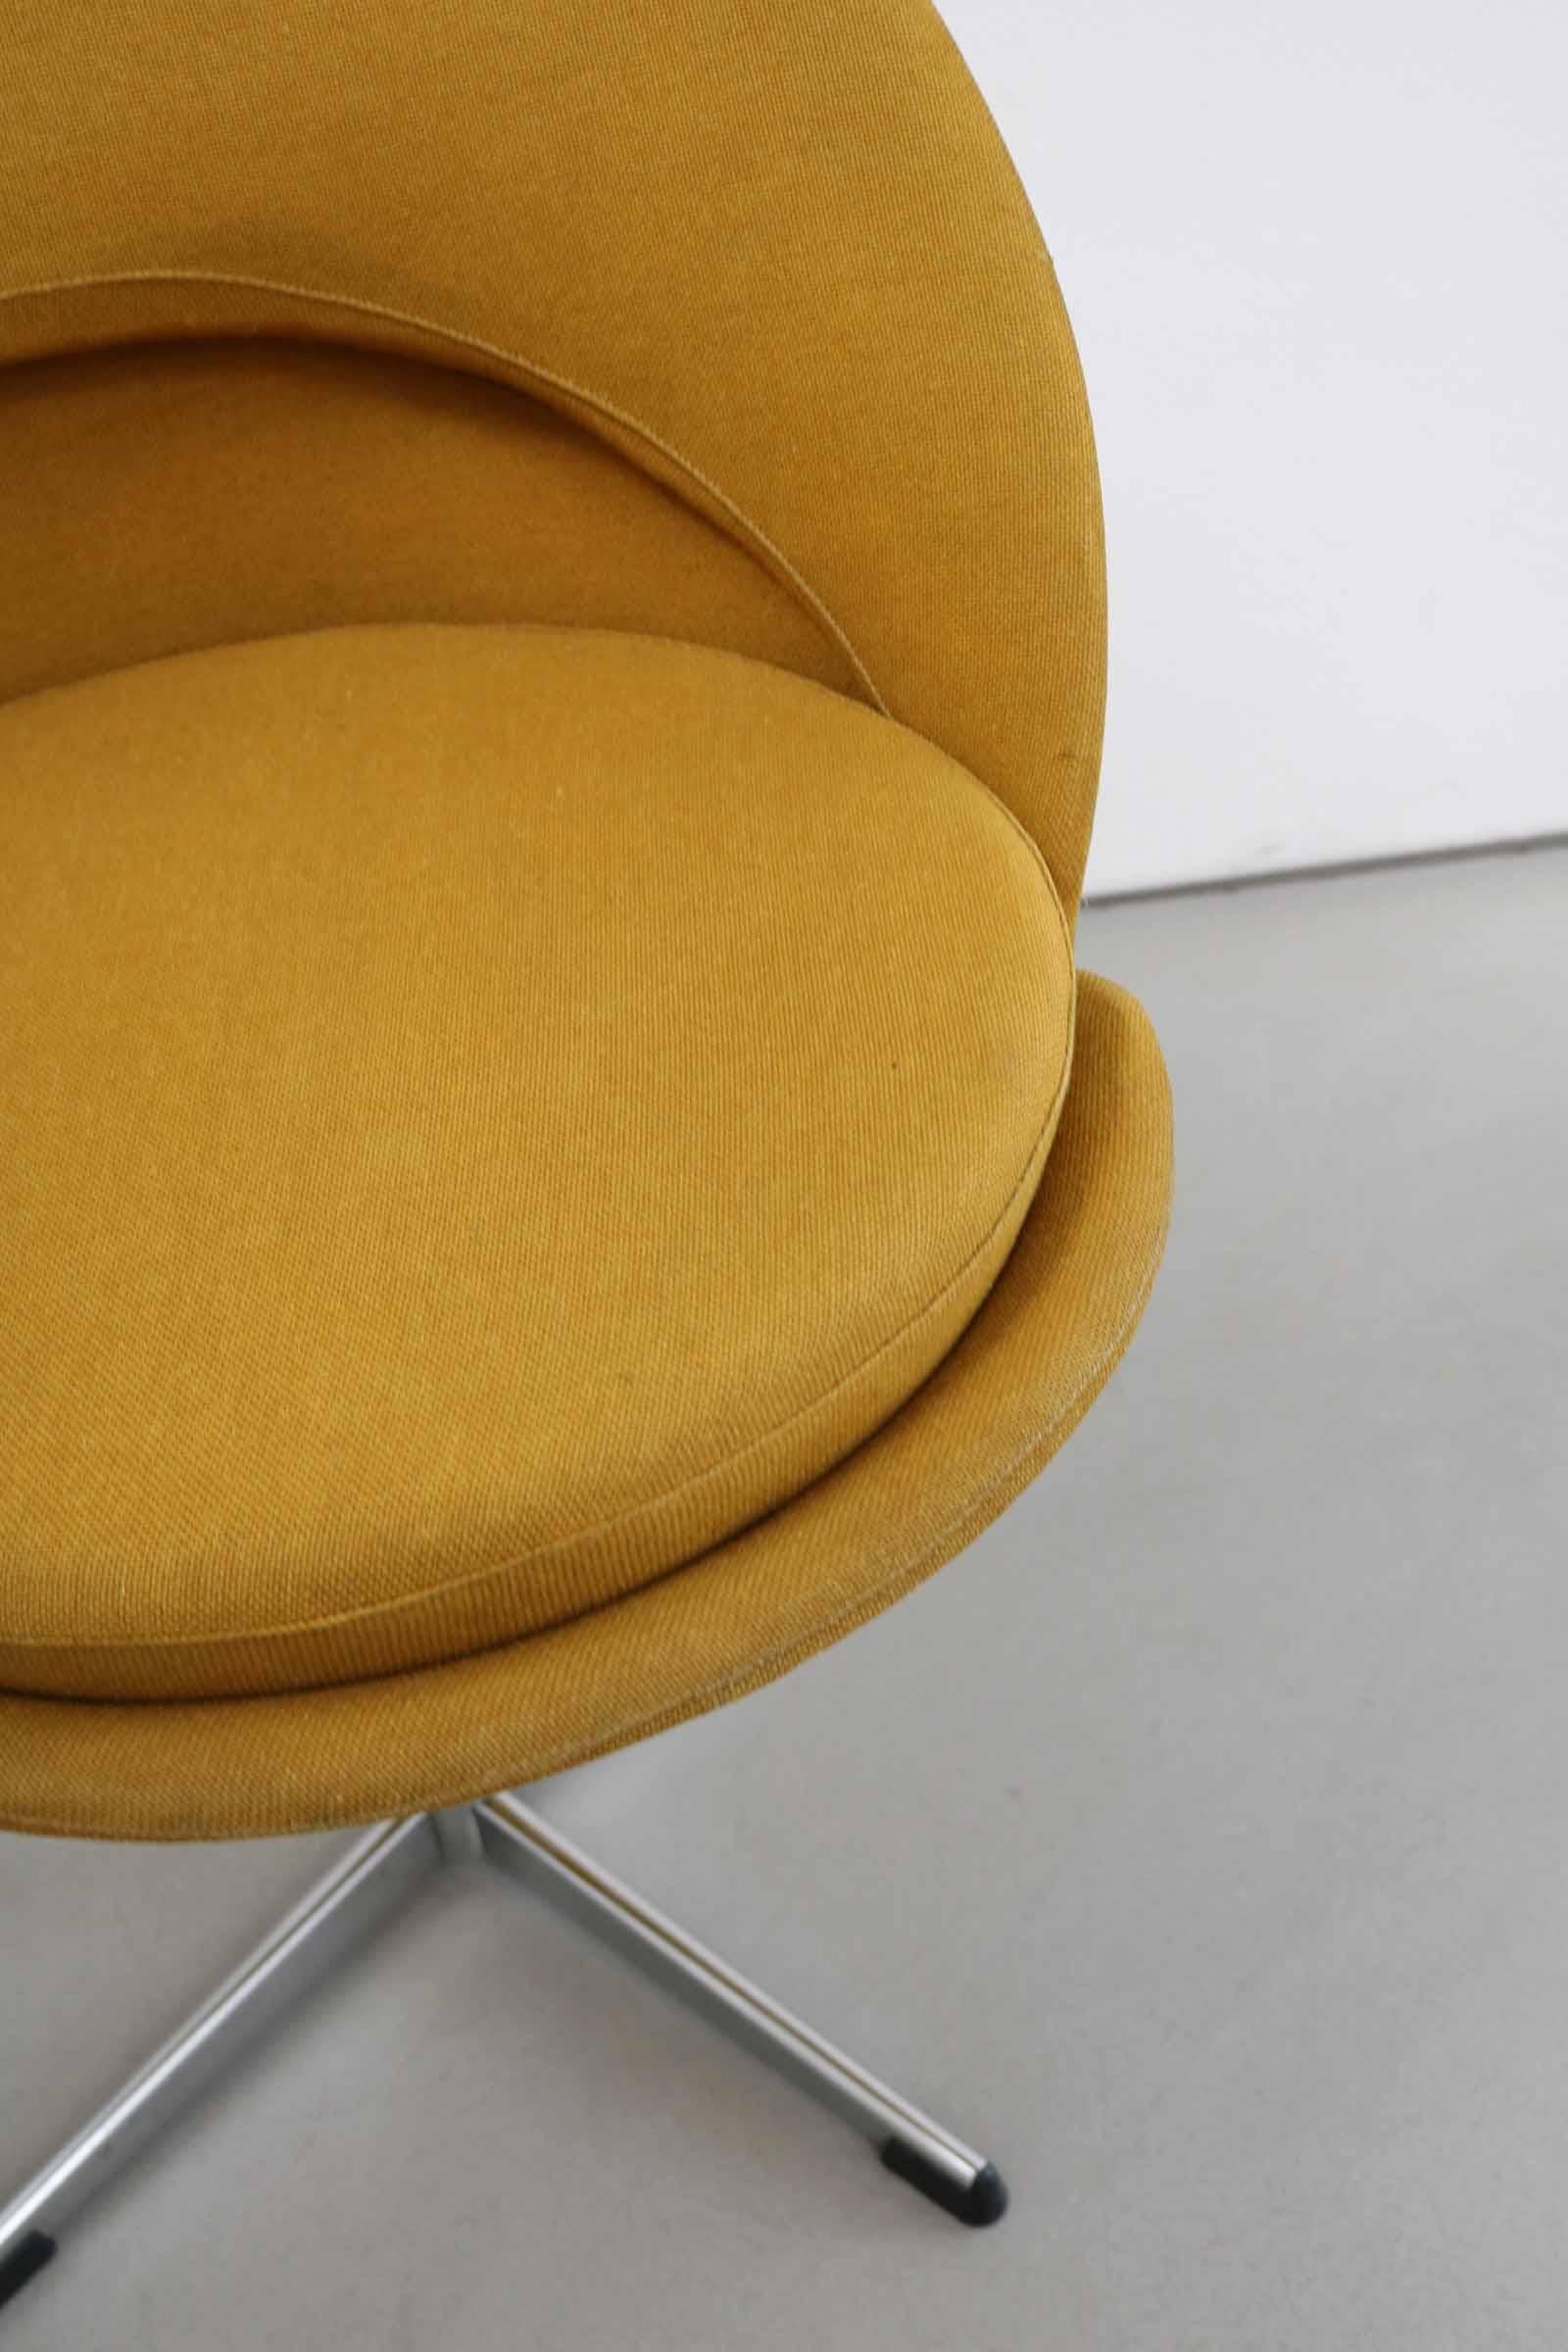 Verner Panton Mustard Yellow Cone Chair in Original Fabric, Denmark, 1960s For Sale 2